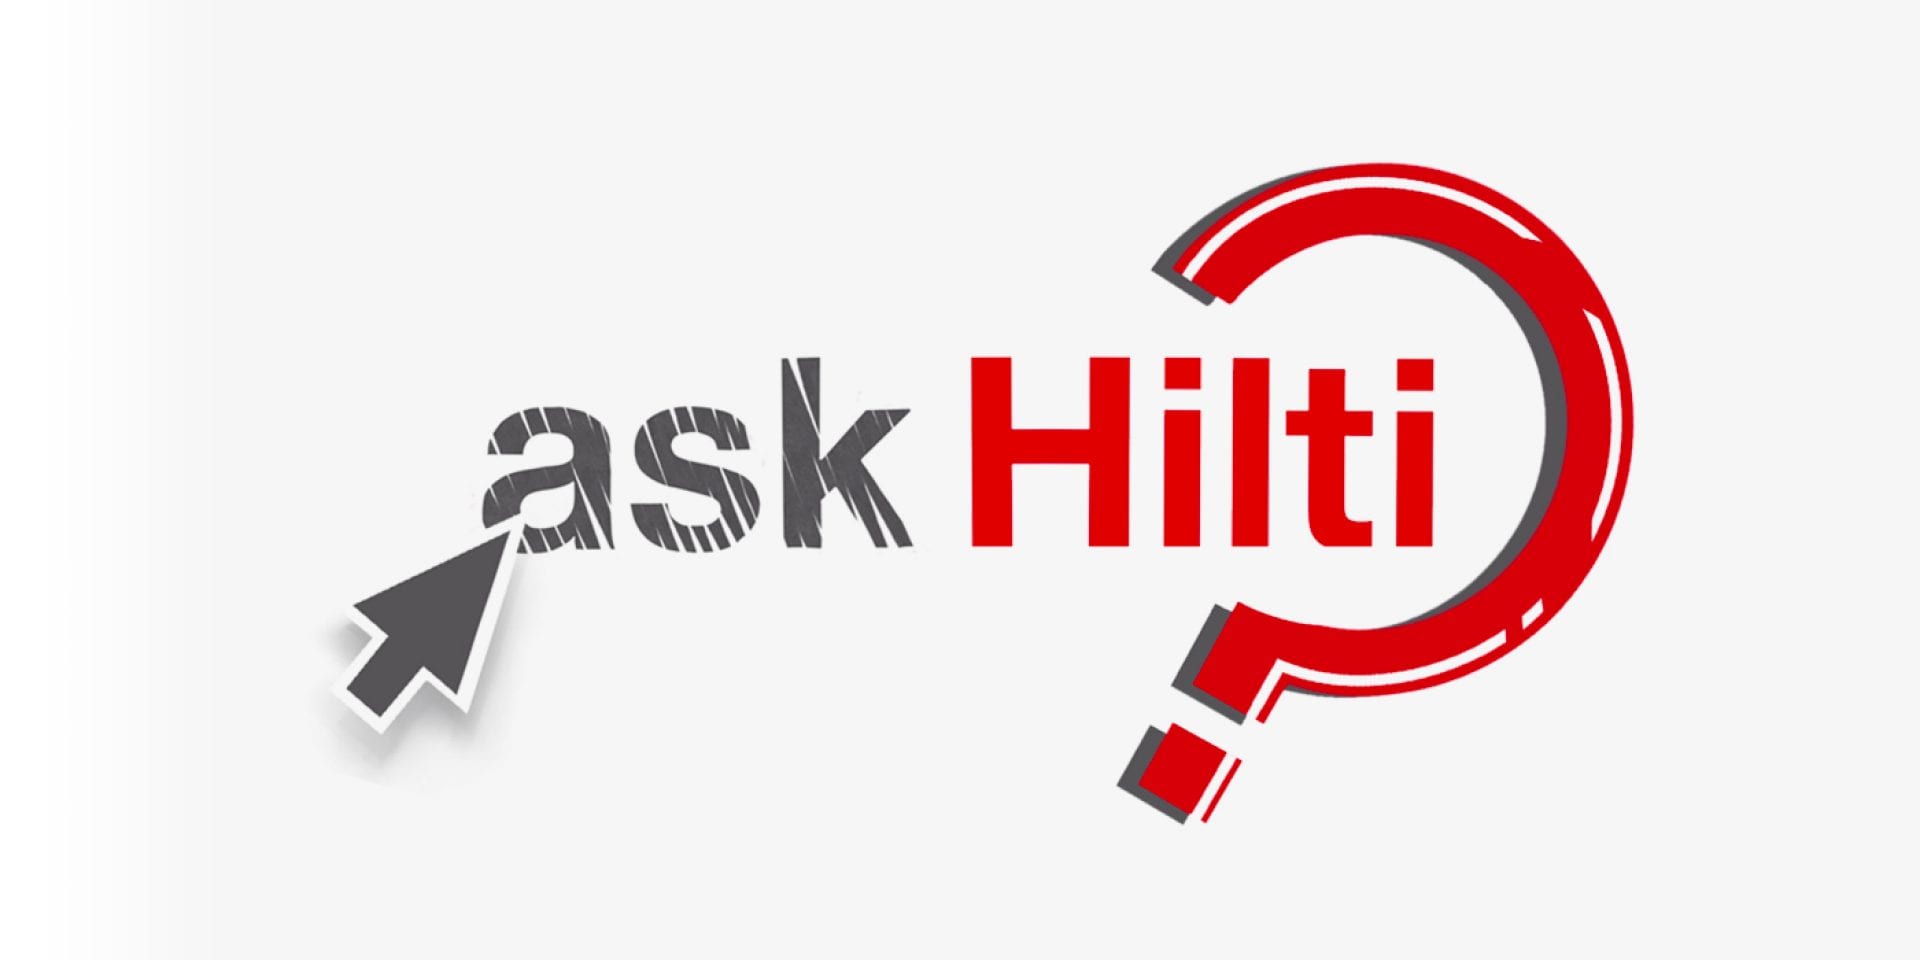 Ask Hilti